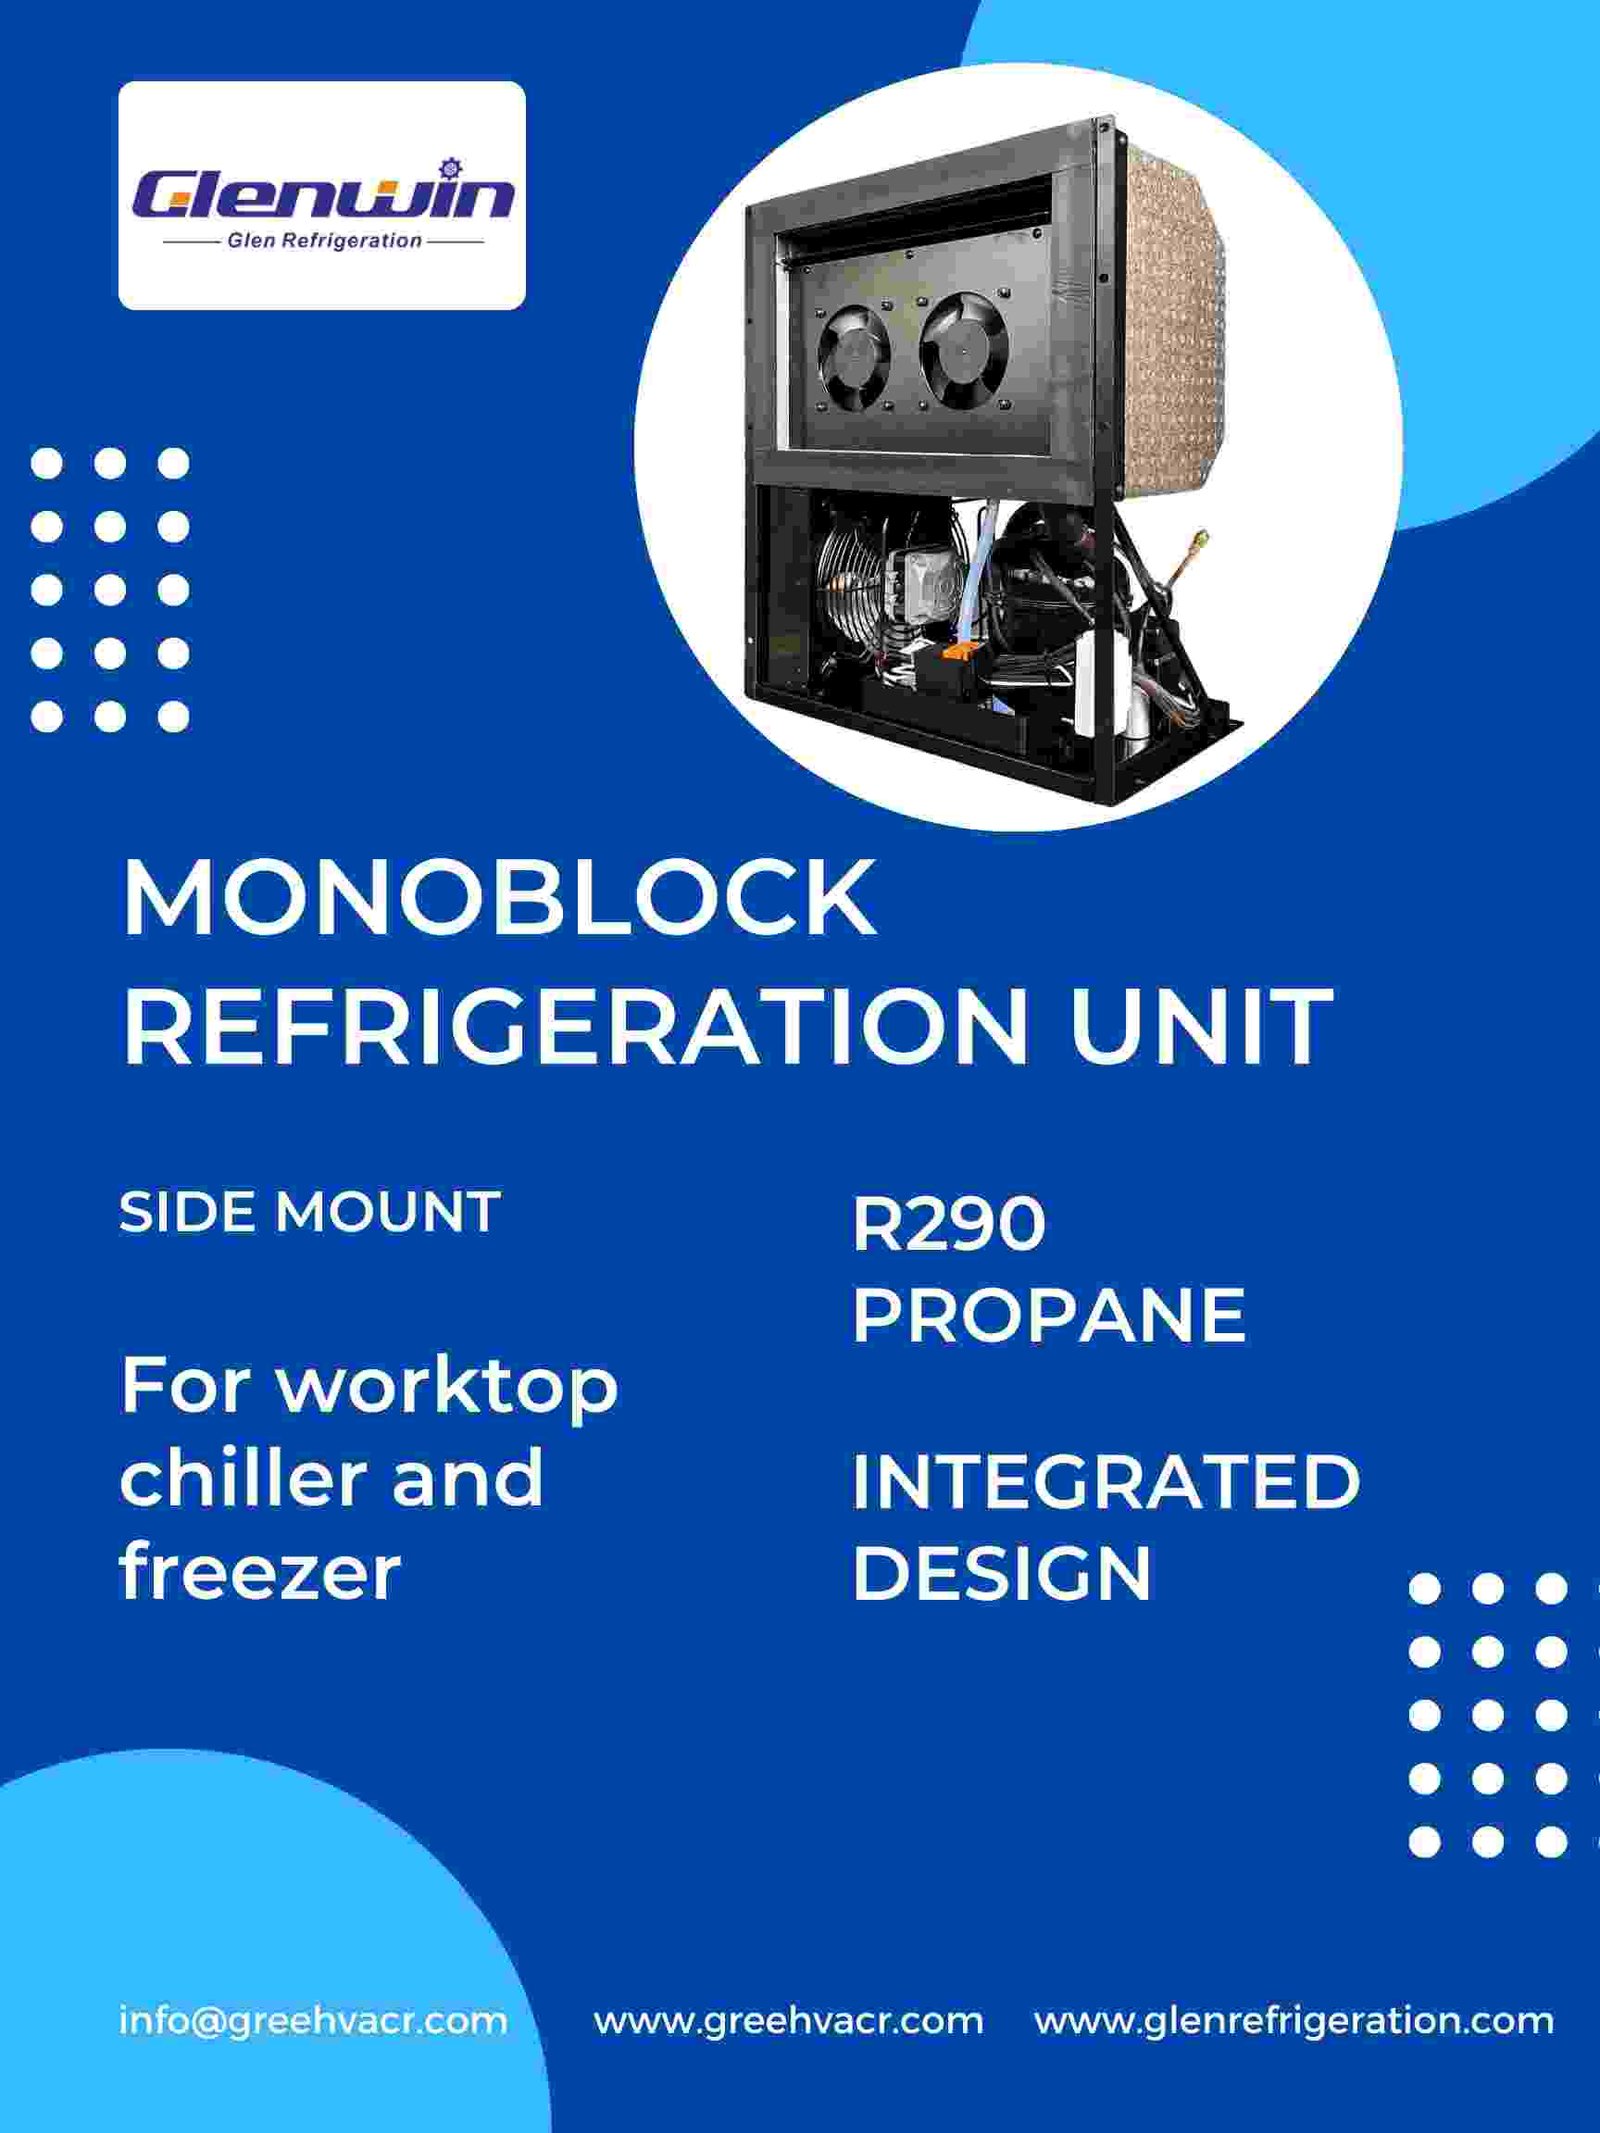 Side mount monoblock refrigeration unit specification Glen Refrigeration